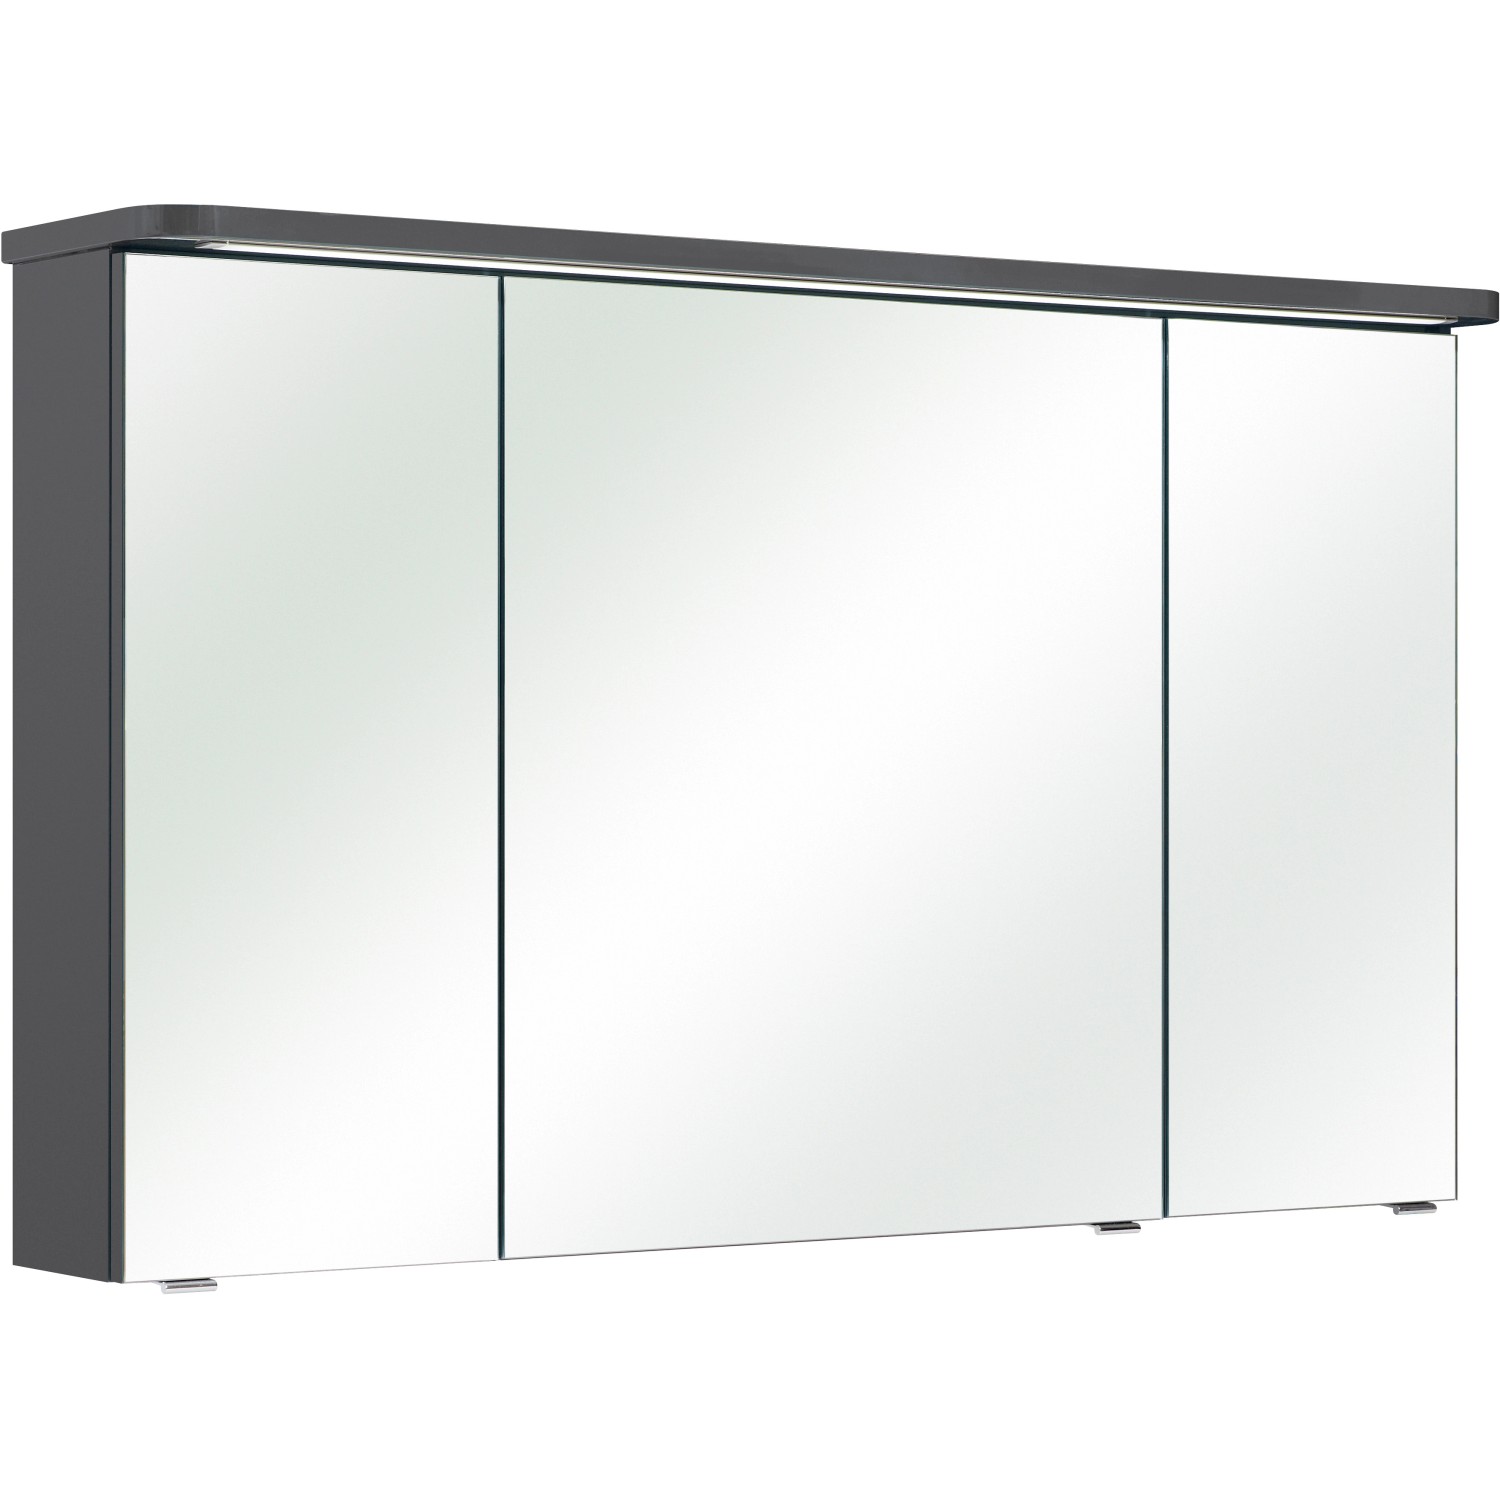 Pelipal Spiegelschrank Serie 4005 Quarzgrau Hochglanz 120 cm mit Softclose Türen